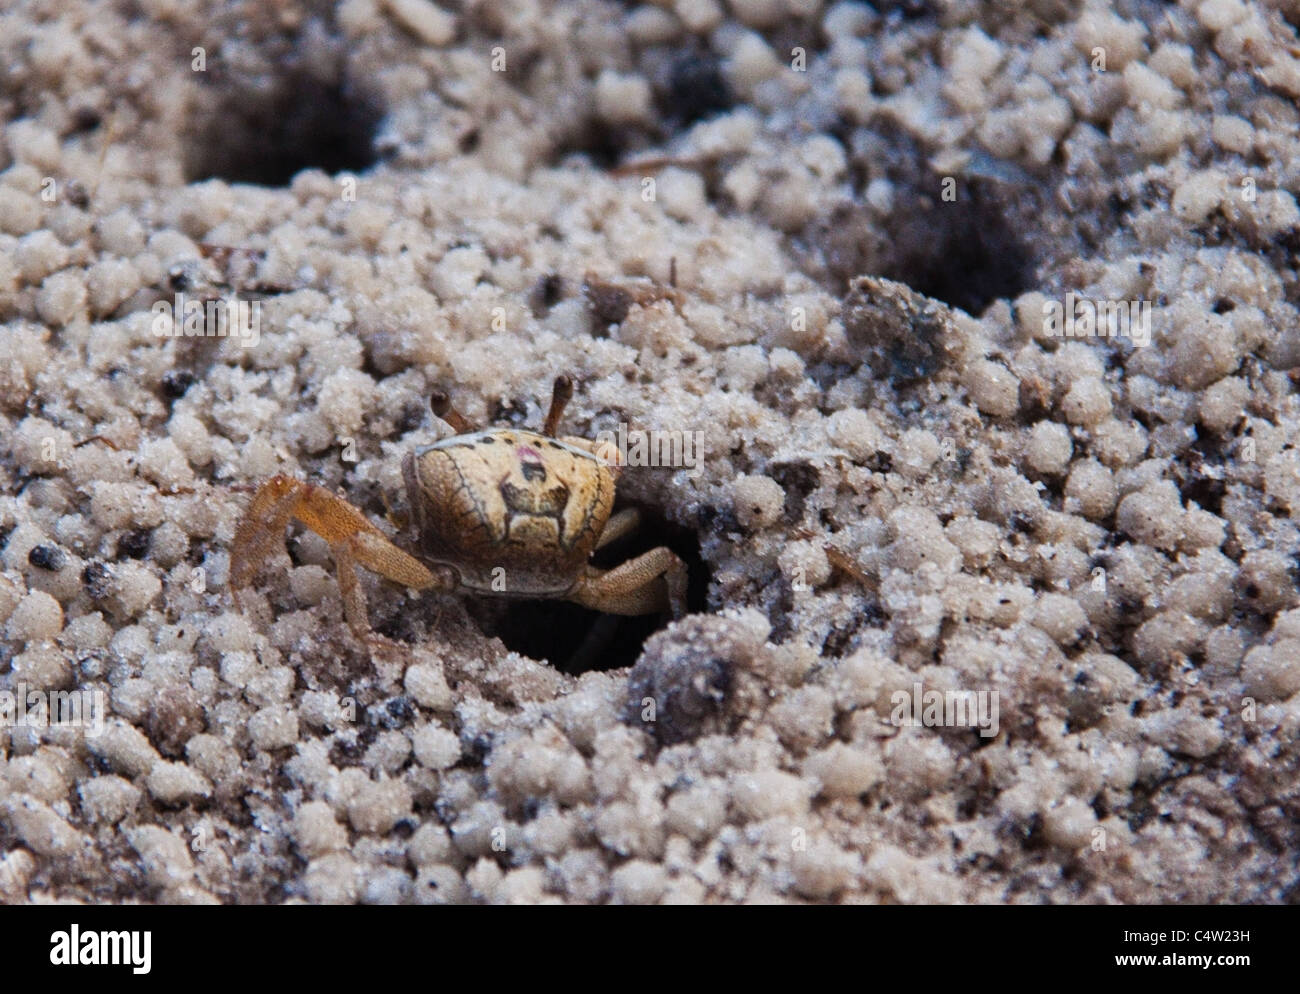 Fiddler crab (uca) in burrow entrance at St Marks National Wildlife Refuge, Florida, USA Stock Photo